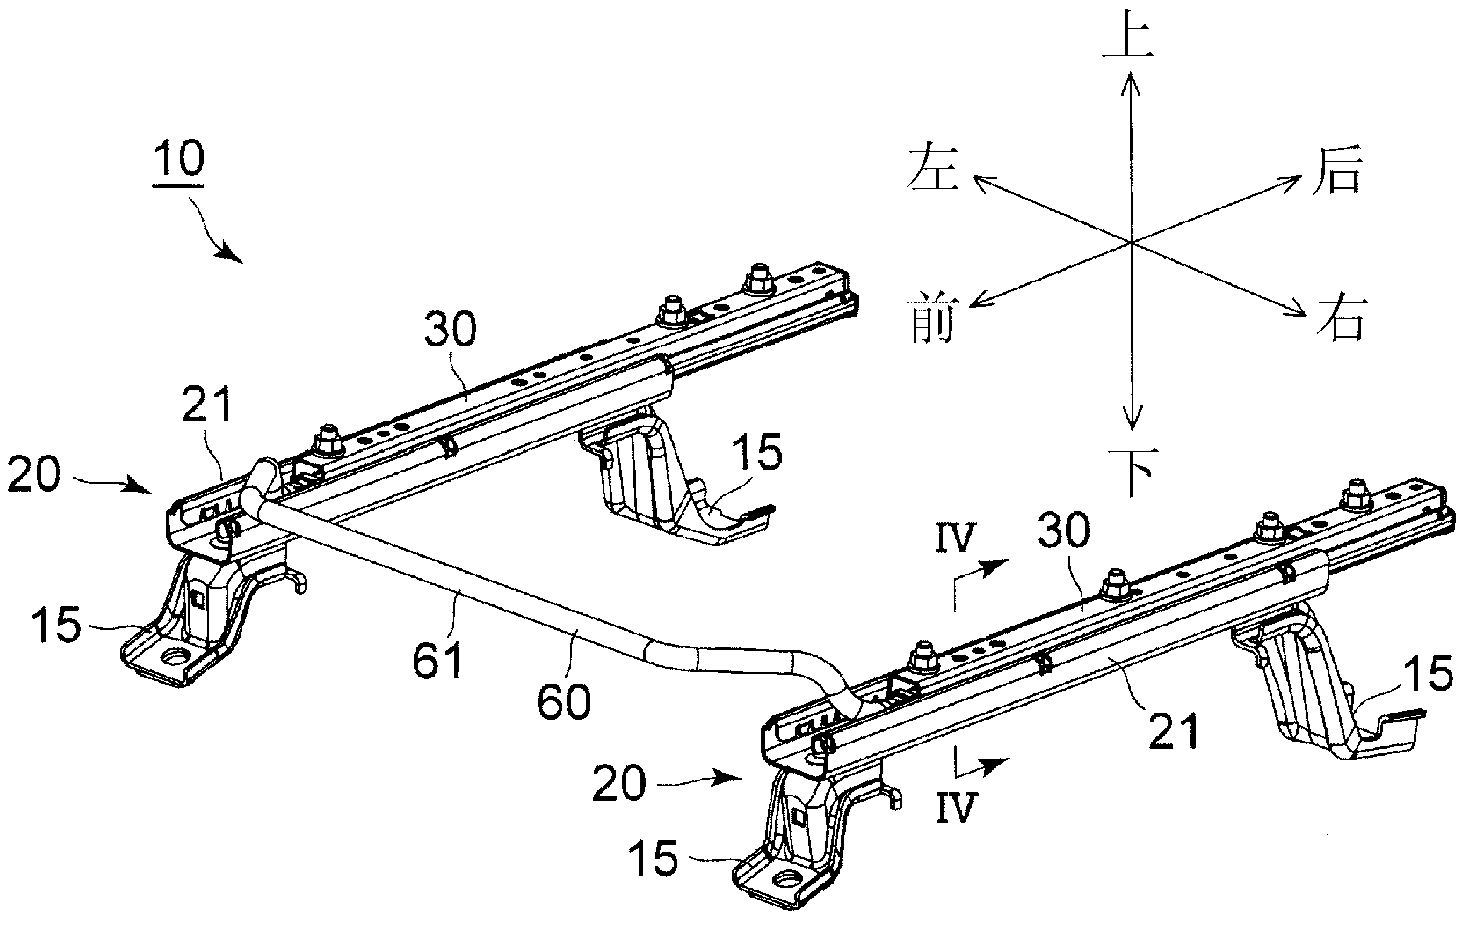 Slide rail device for vehicle